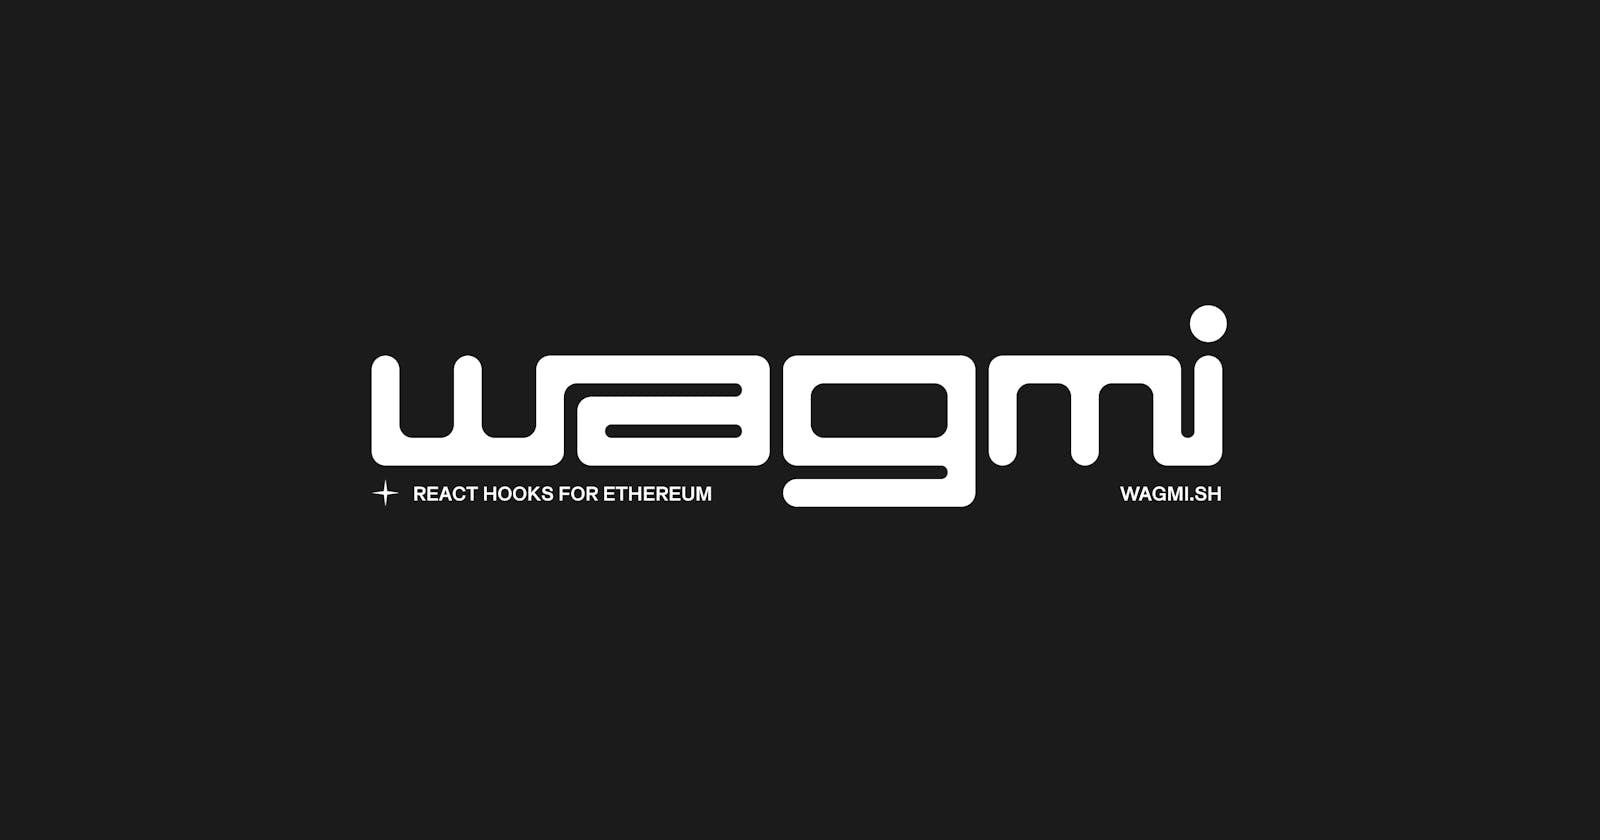 Wagmi-Etherium hooks for React